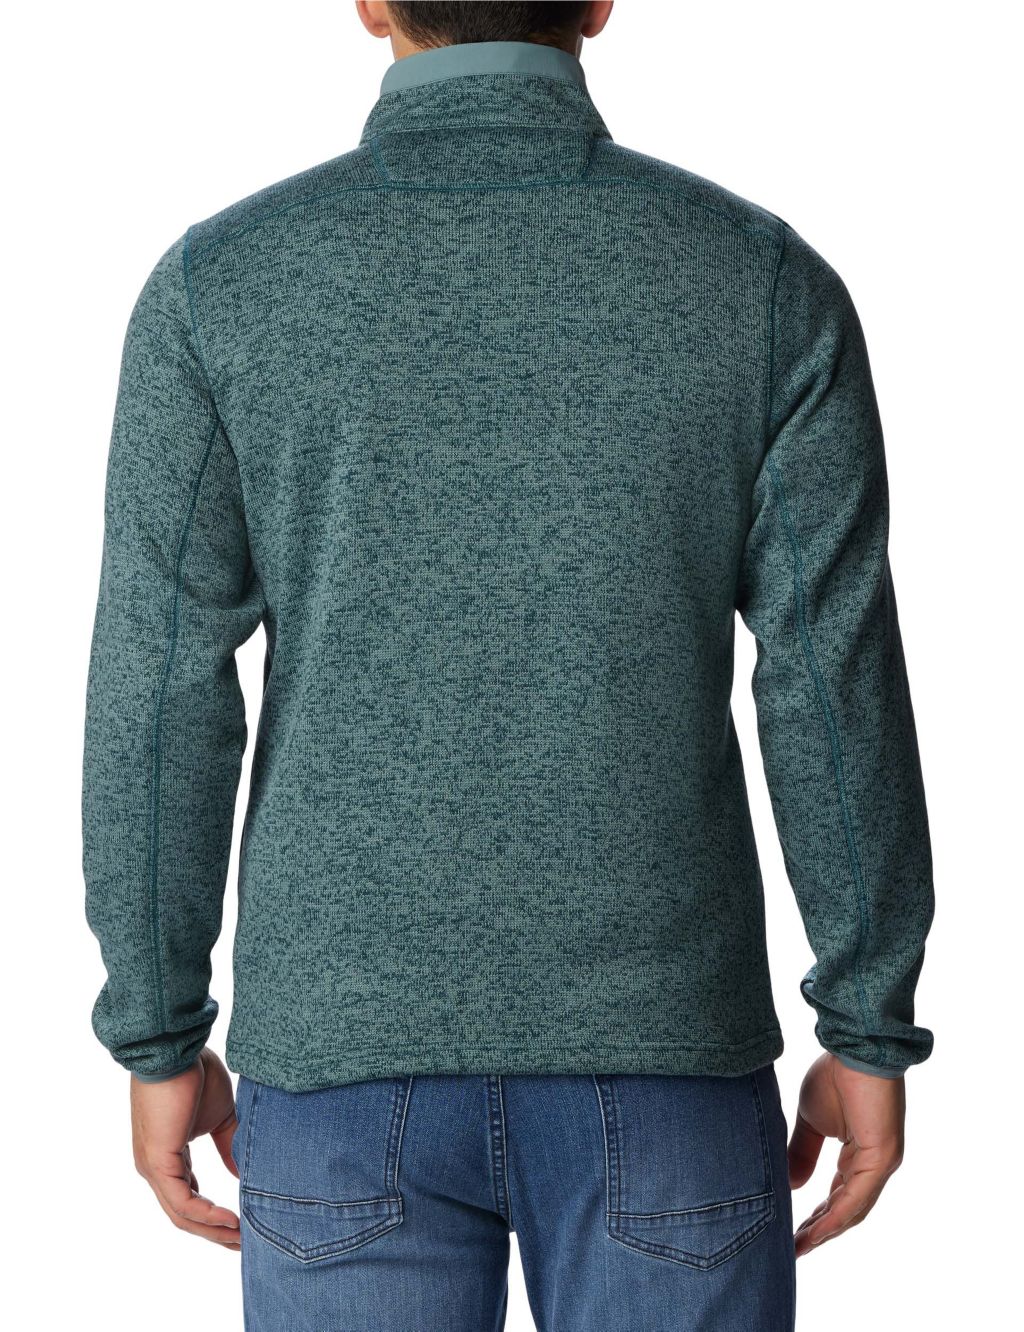 Sweater Weather Fleece Half Zip Jacket image 3